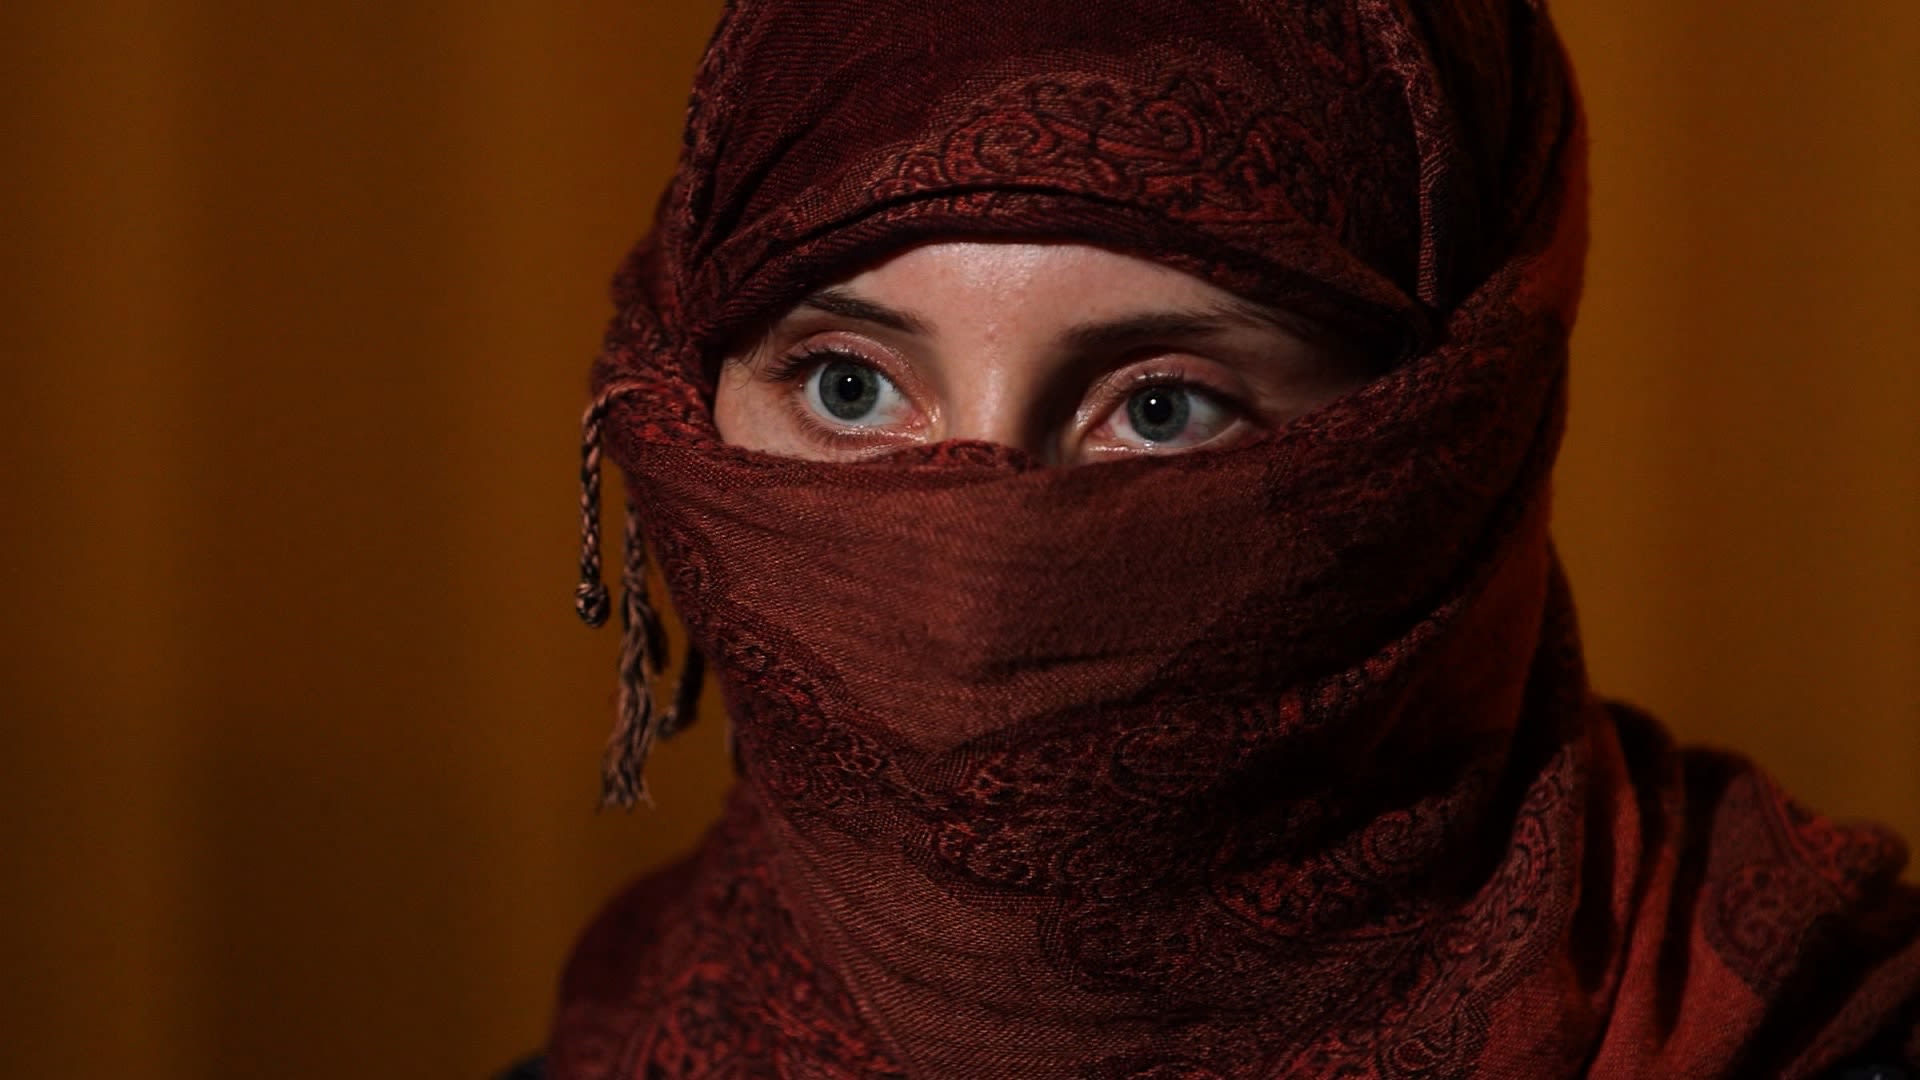 Muslim Kidnap Sex Videos - ISIS chief's slave tells how he beat her, raped hostage | CNN